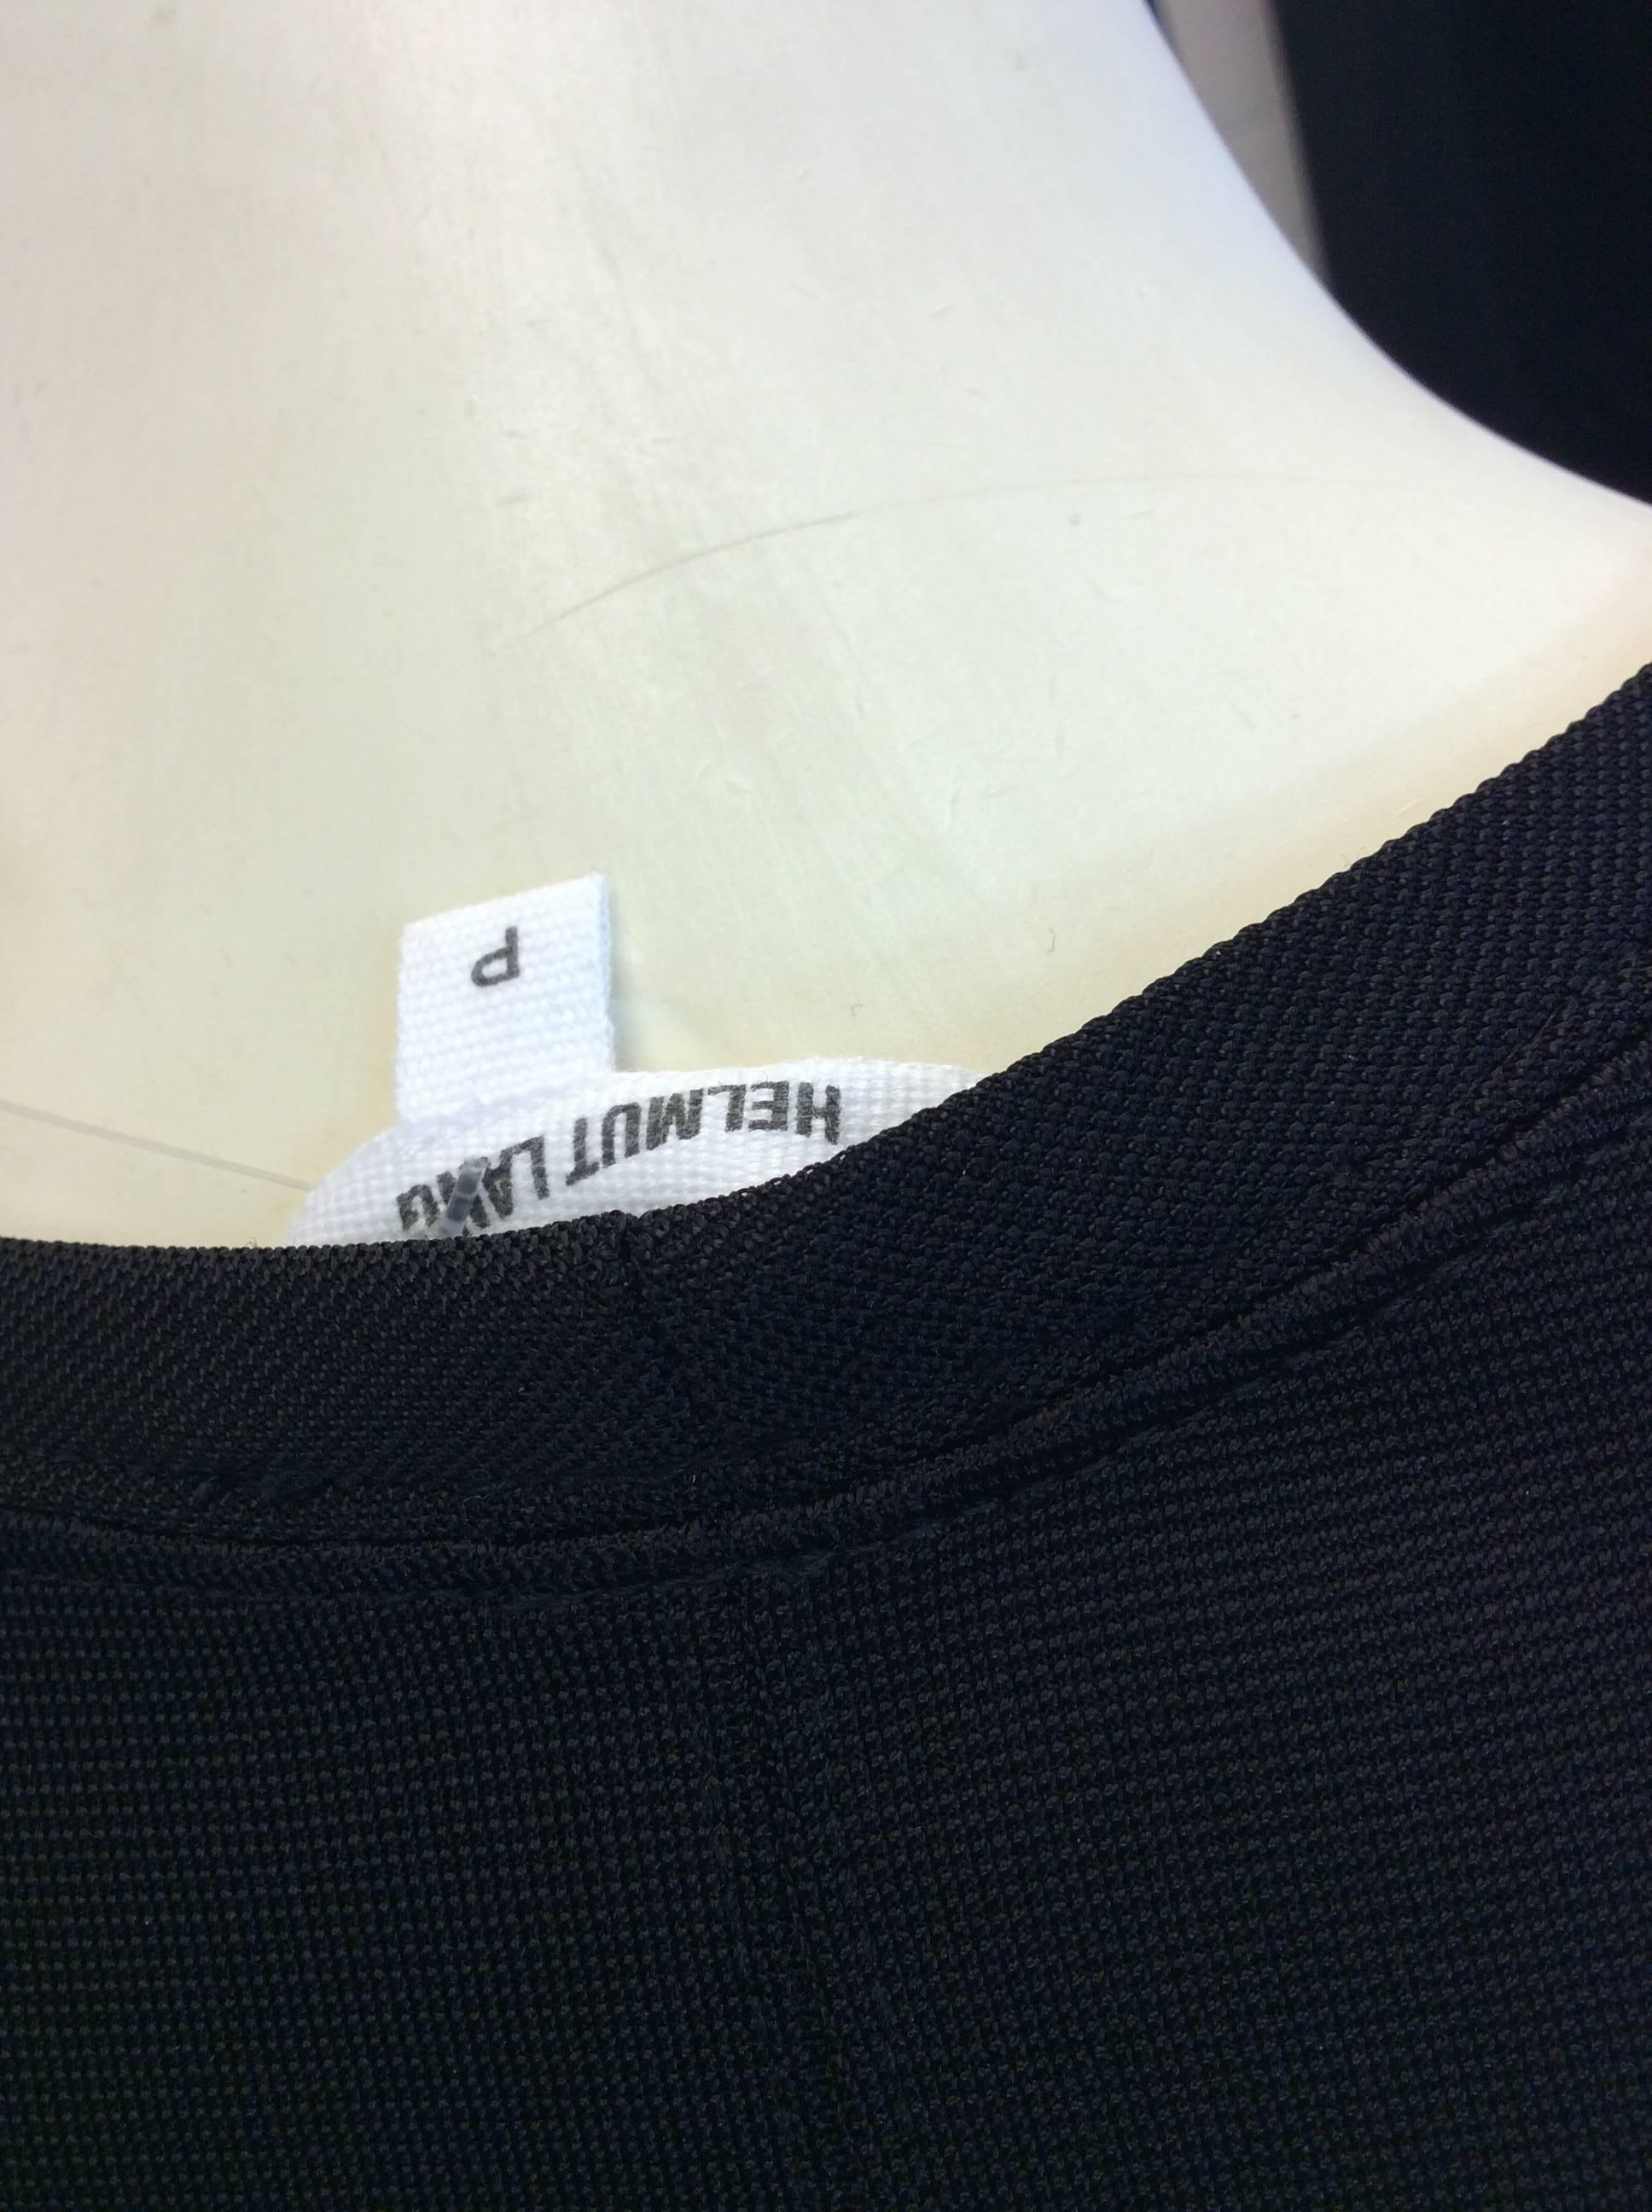 Helmut Lang Black Long Sleeve NWT Dress For Sale 2